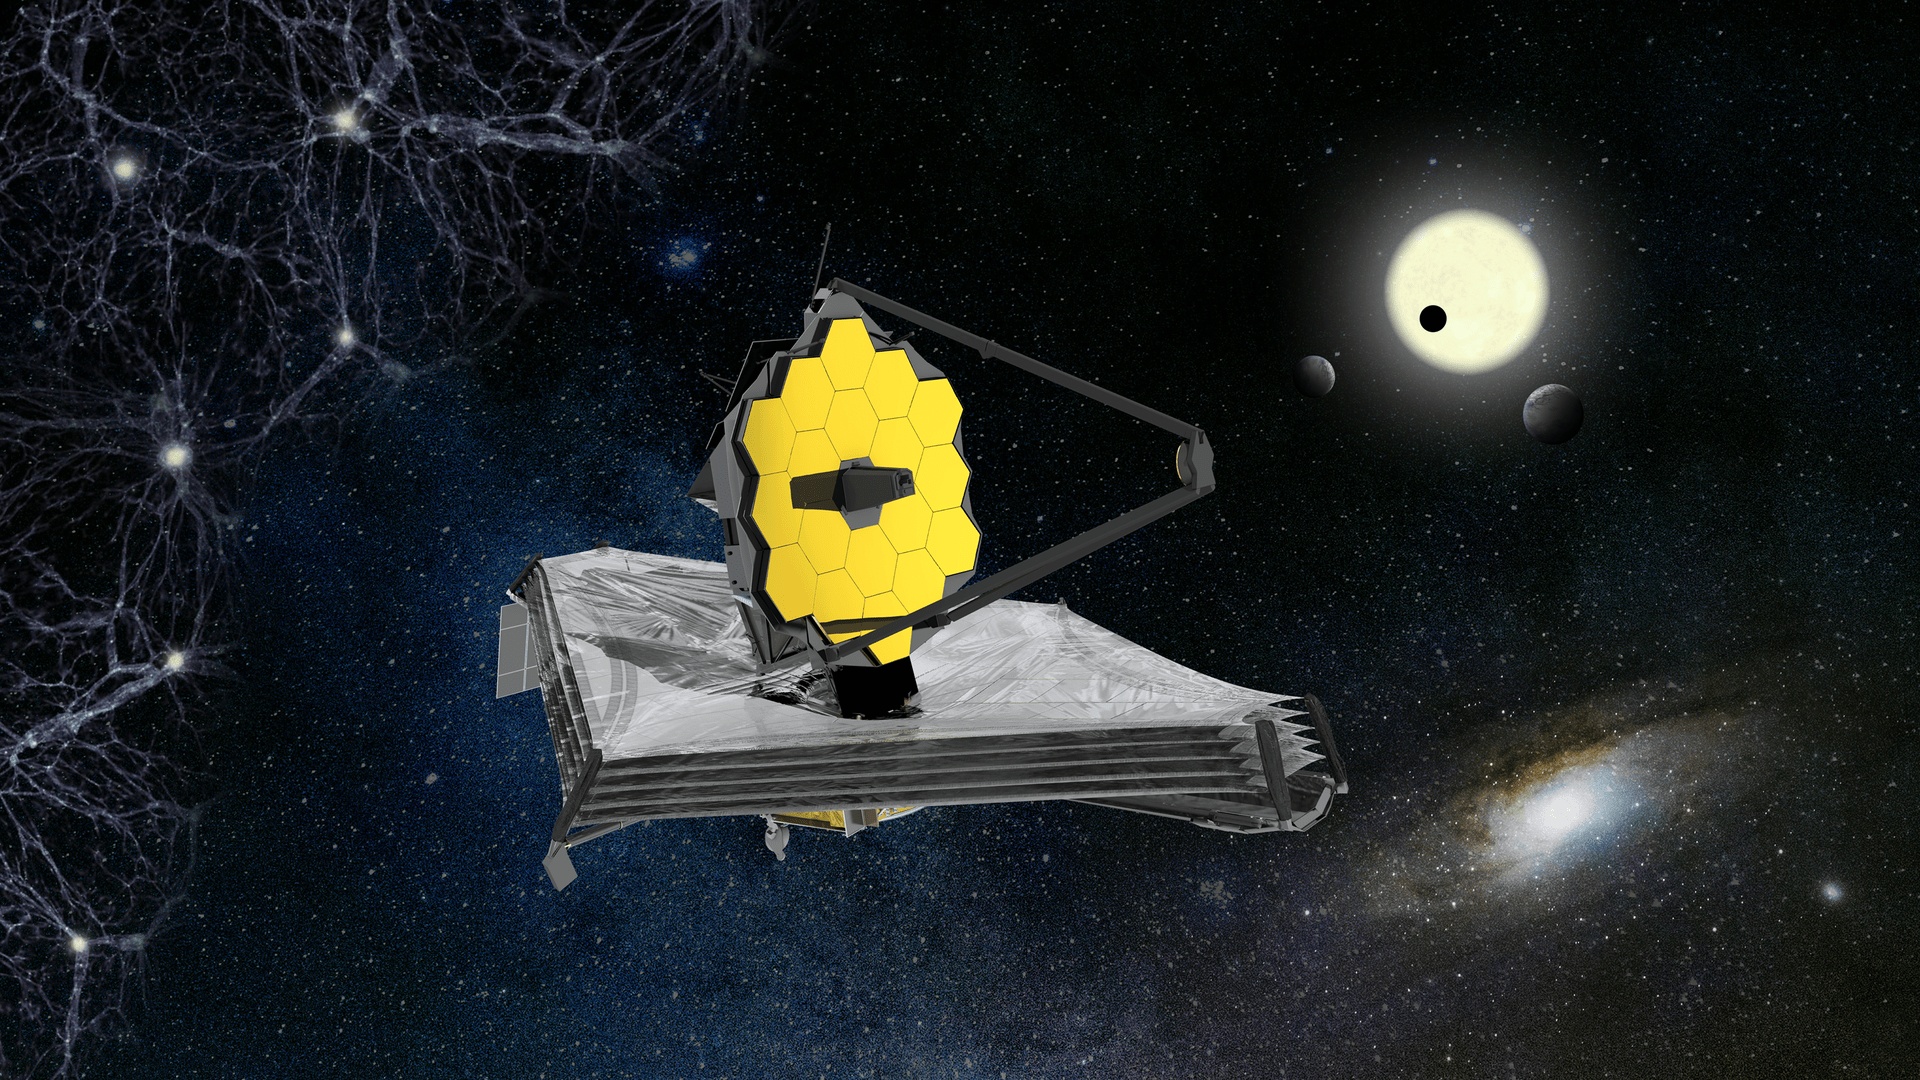 James Webb Telescope desktop wallpaper free download